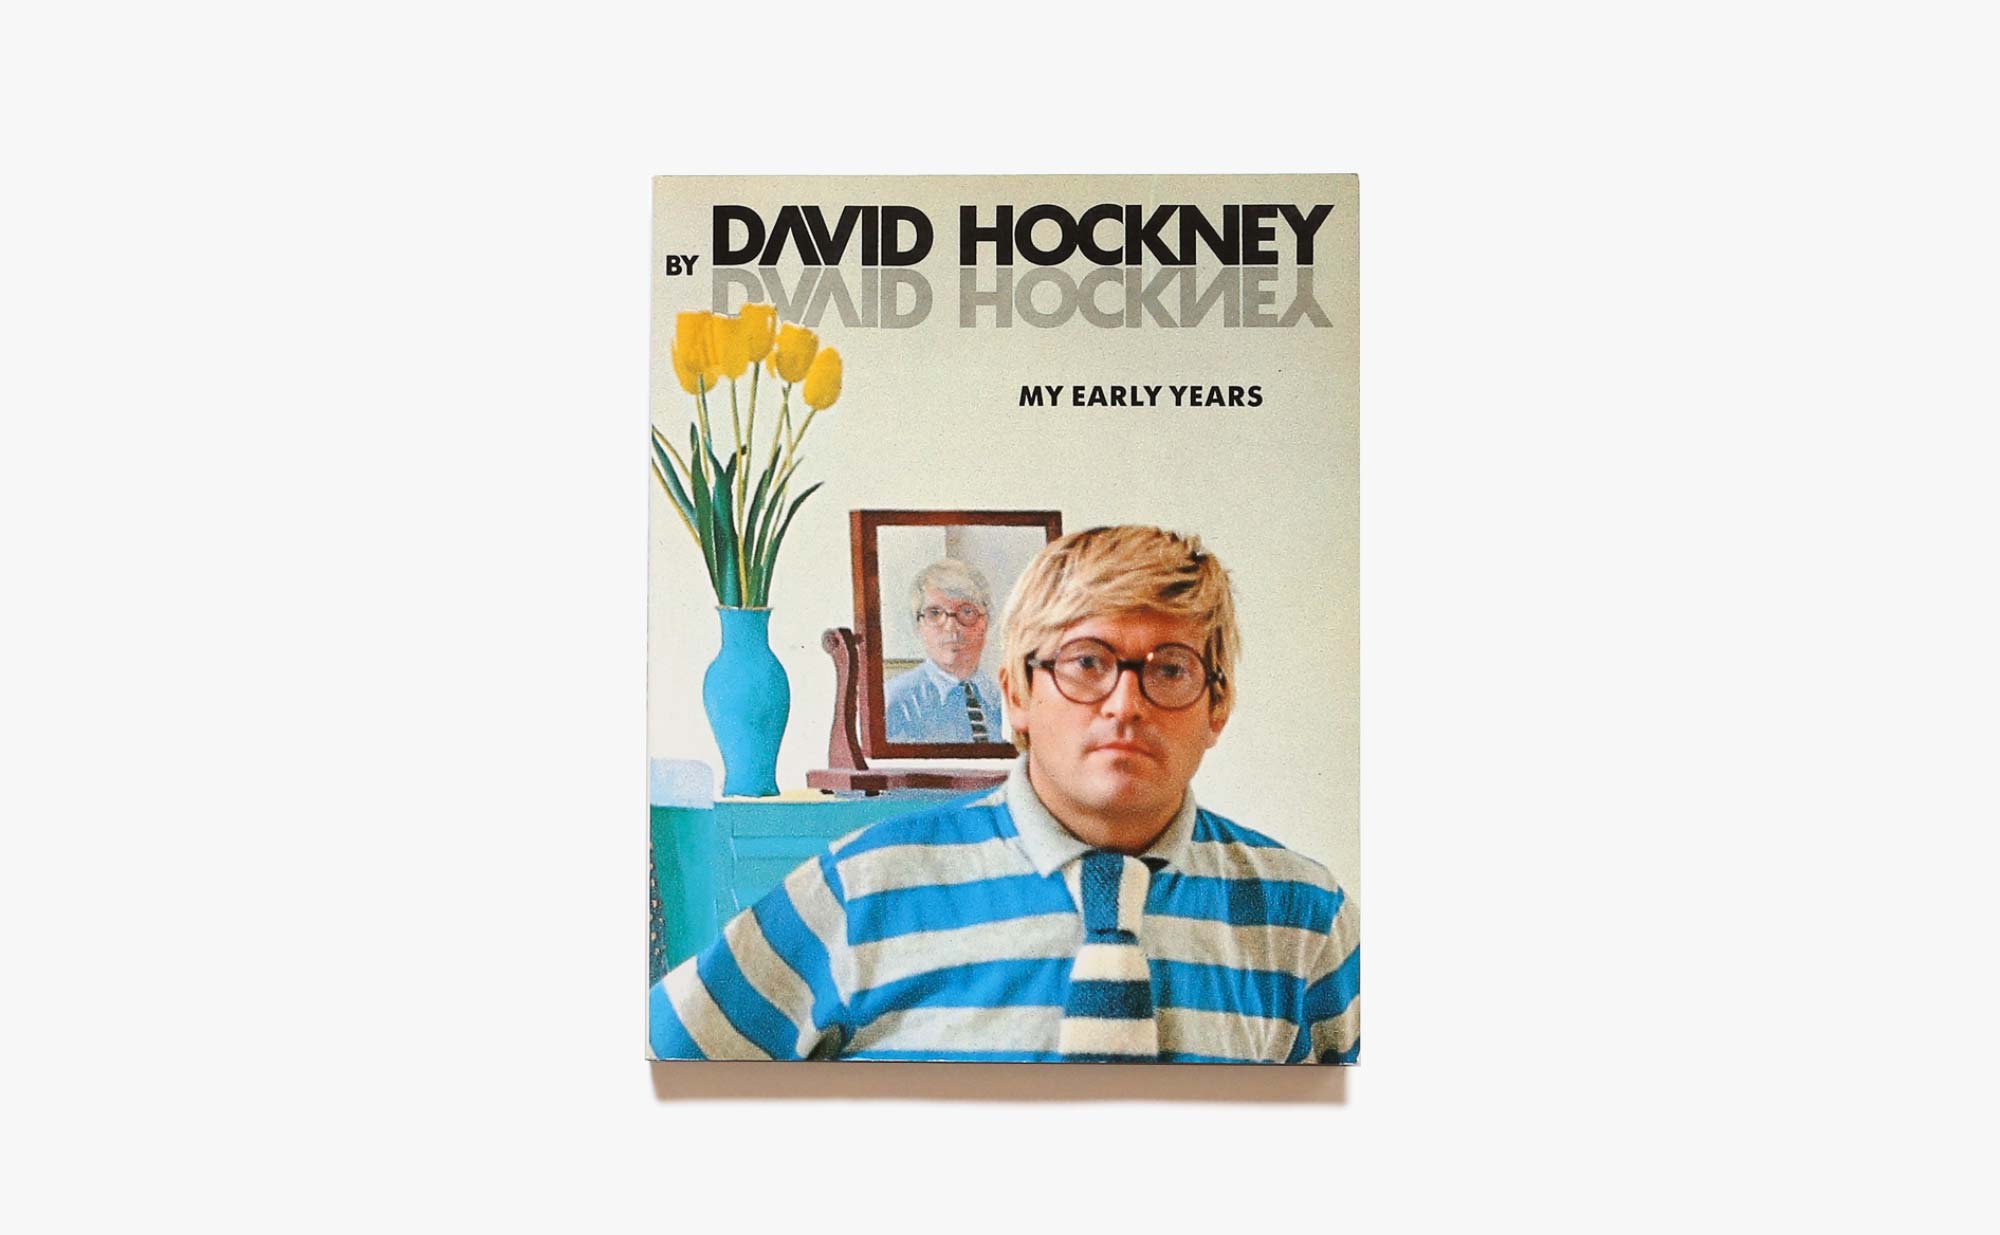 David Hockney by David Hockney: My Early Years